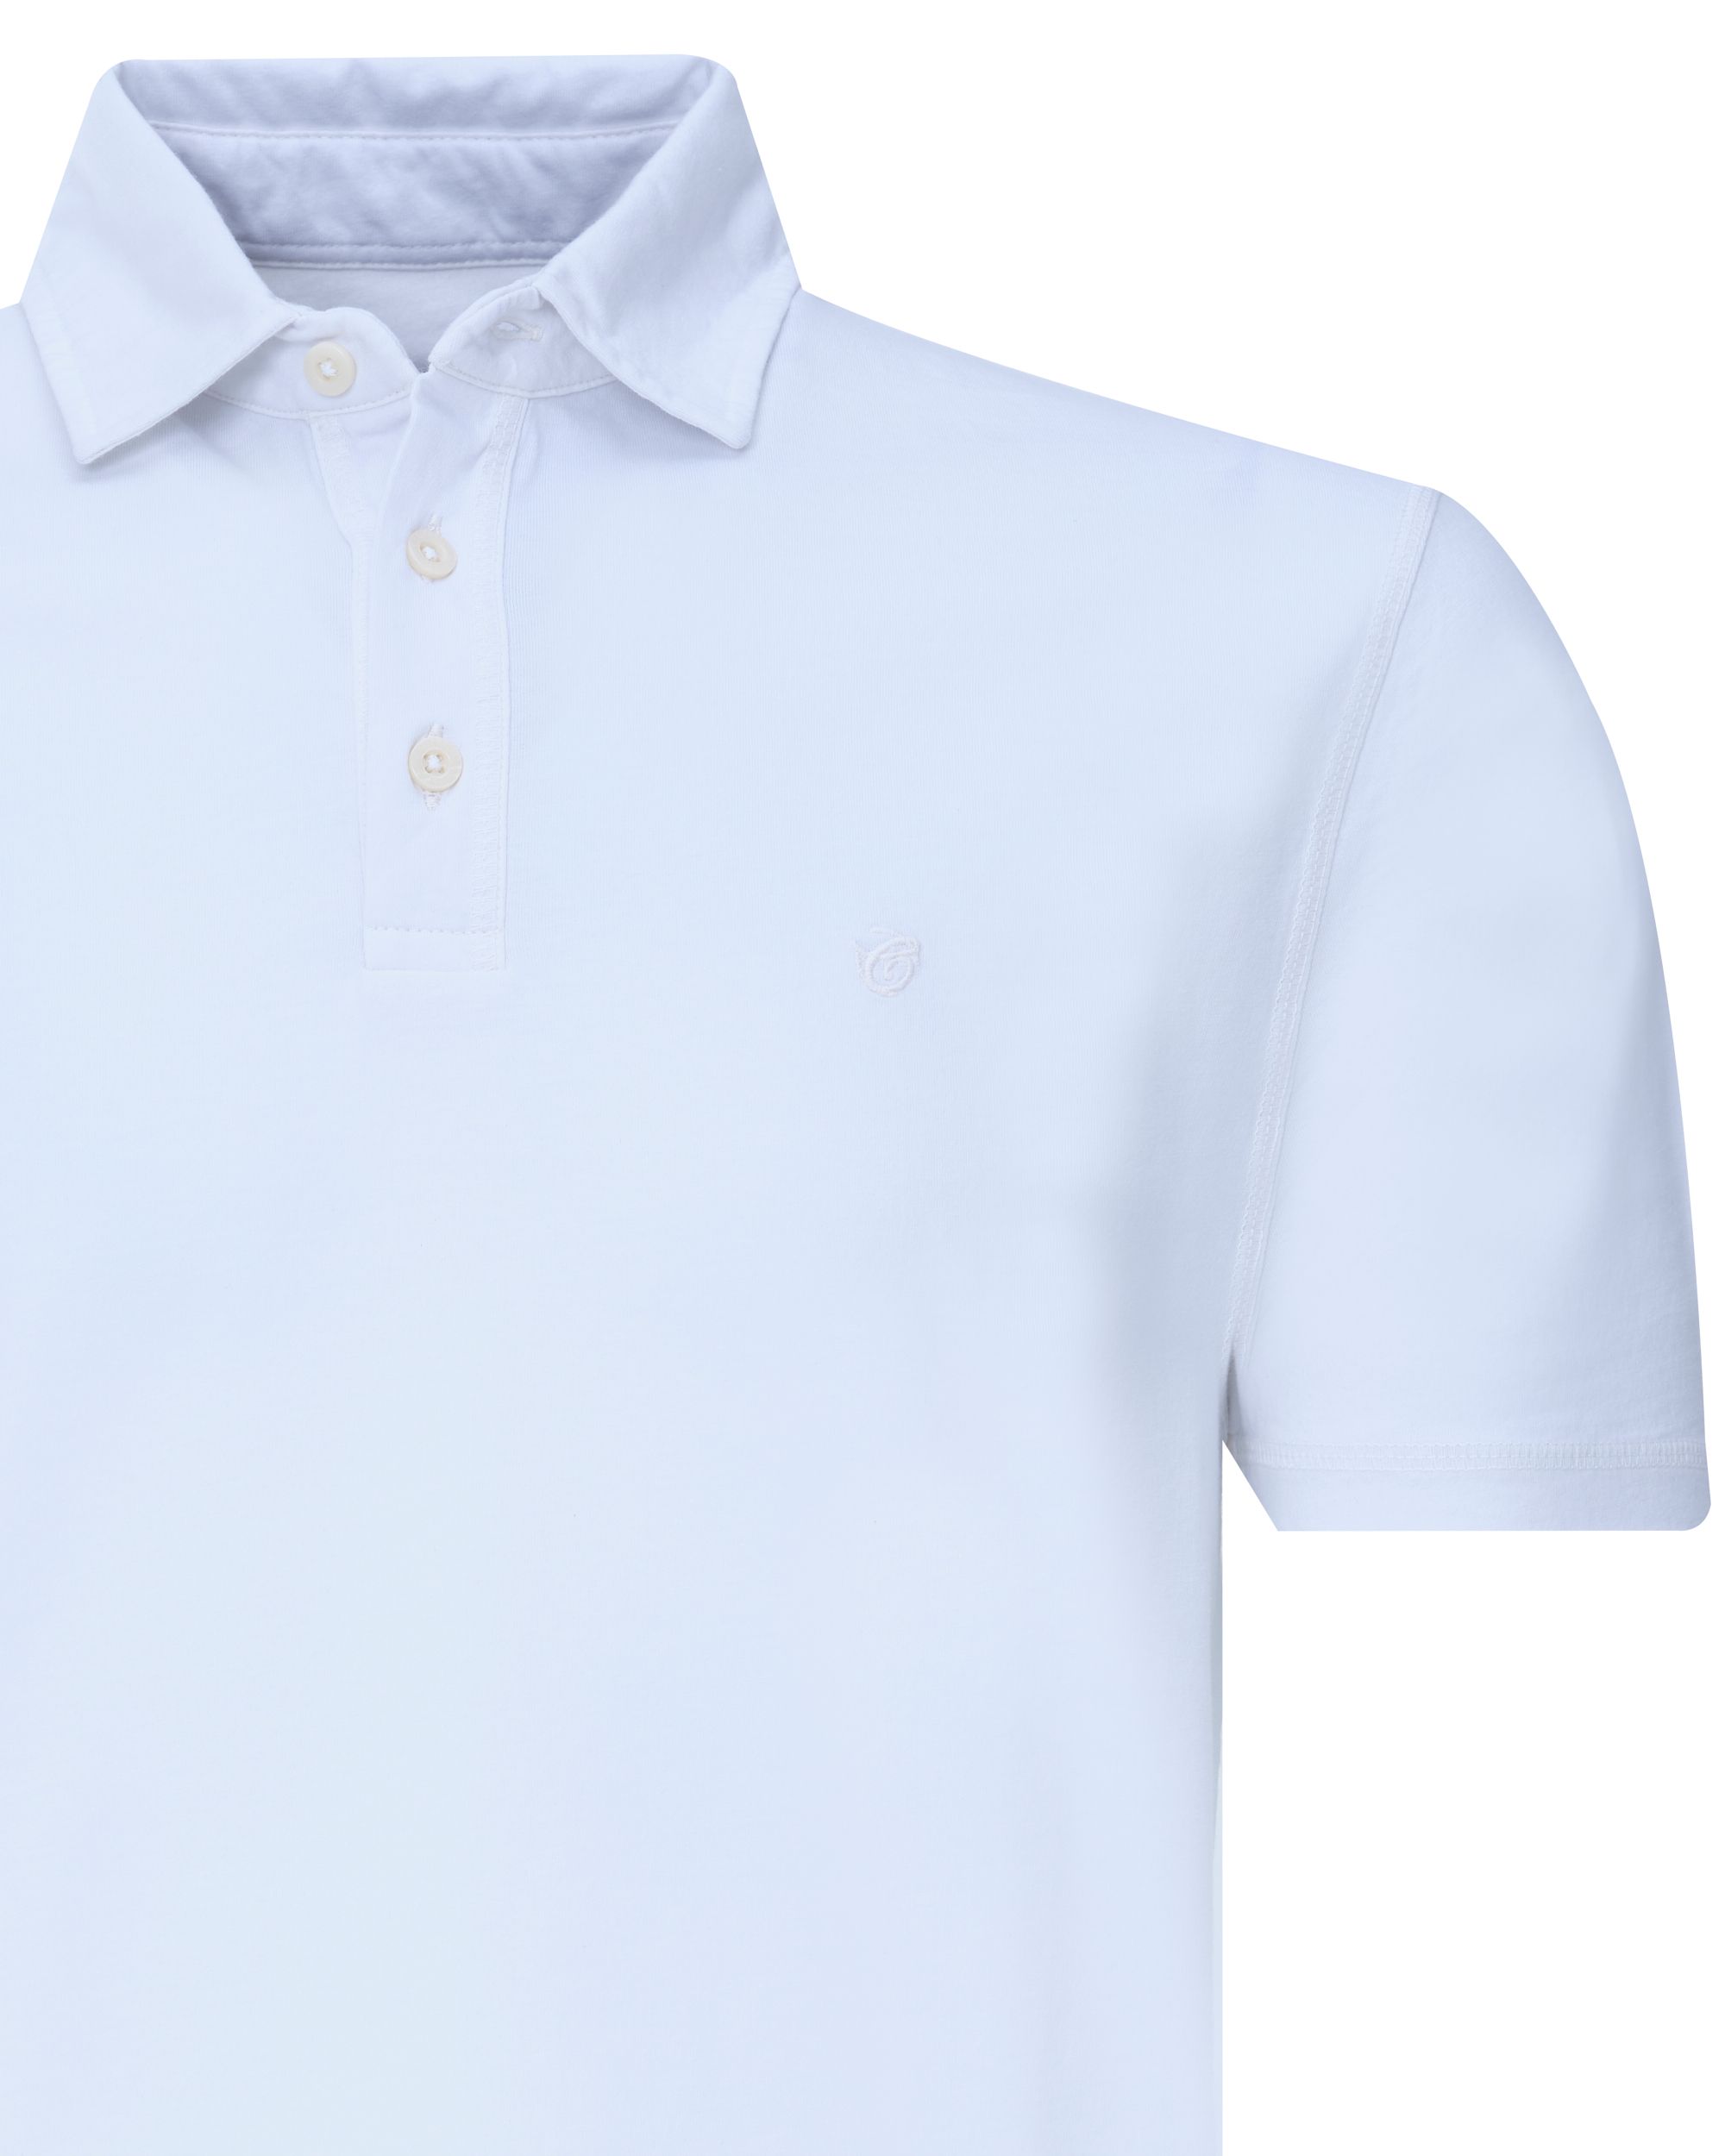 Campbell Classic Grove T-shirt KM WHITE 081552-009-L